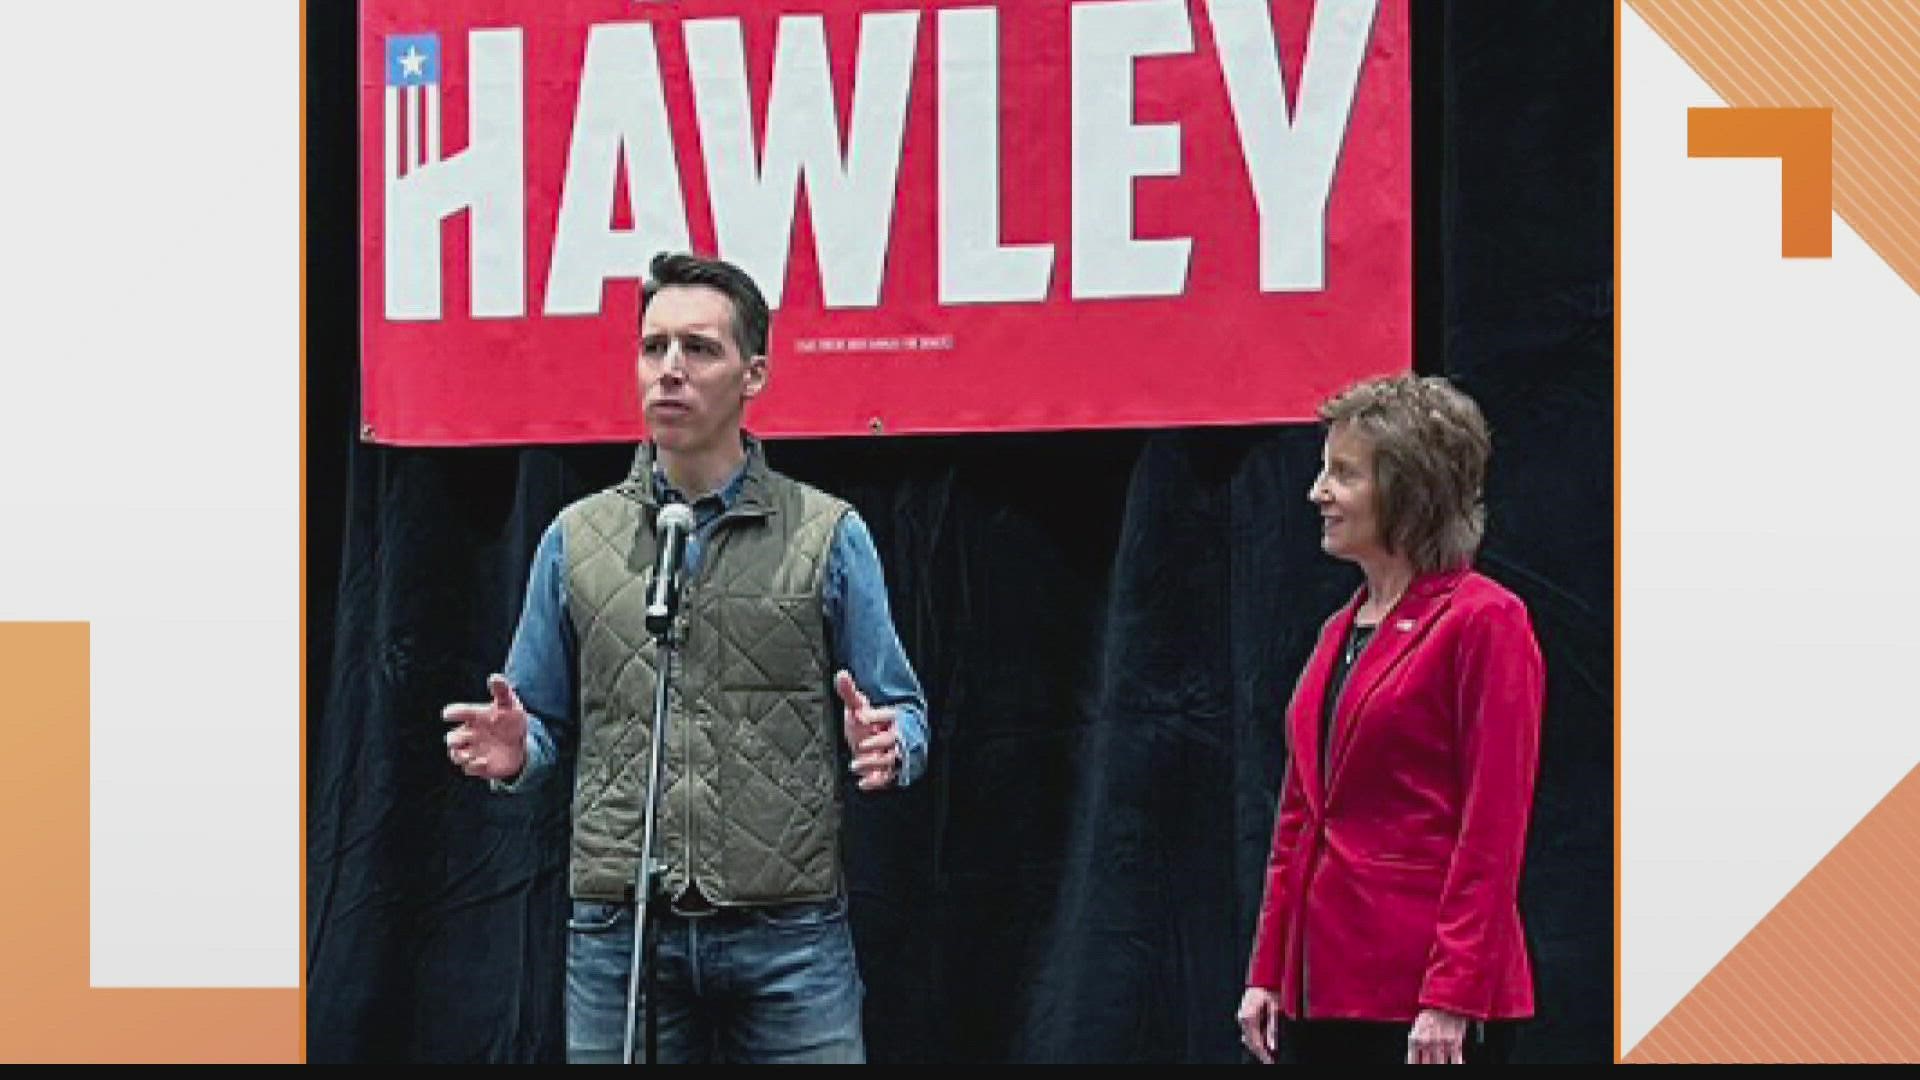 U.S. Rep. Vicky Hartzler has landed the endorsement of would-be colleague Josh Hawley in her 2022 Senate bid.